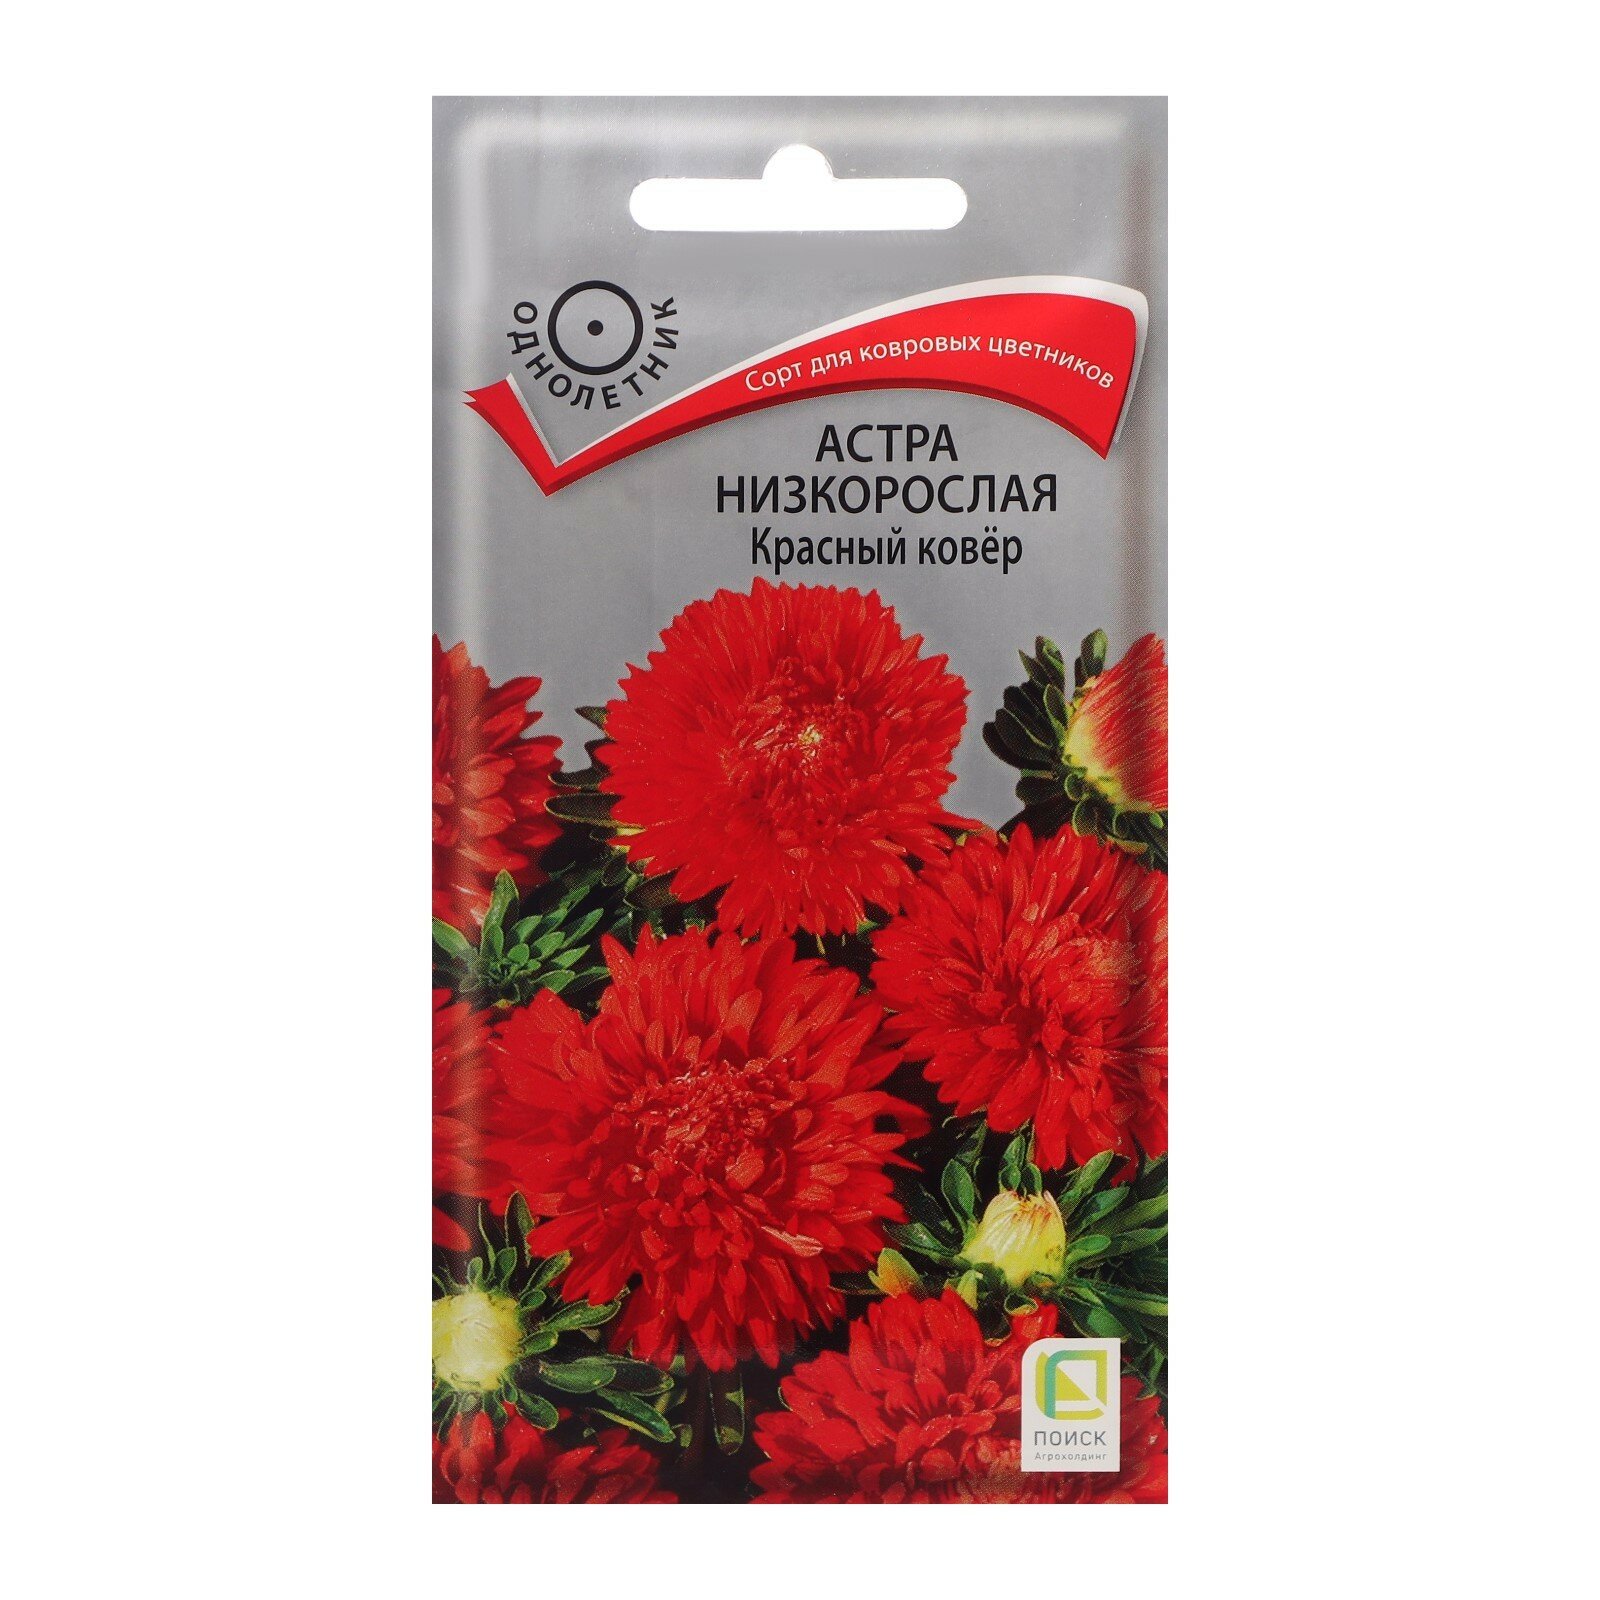 Семена цветов Астра низкорослая "Красный ковер", 0,2 г (1шт.)